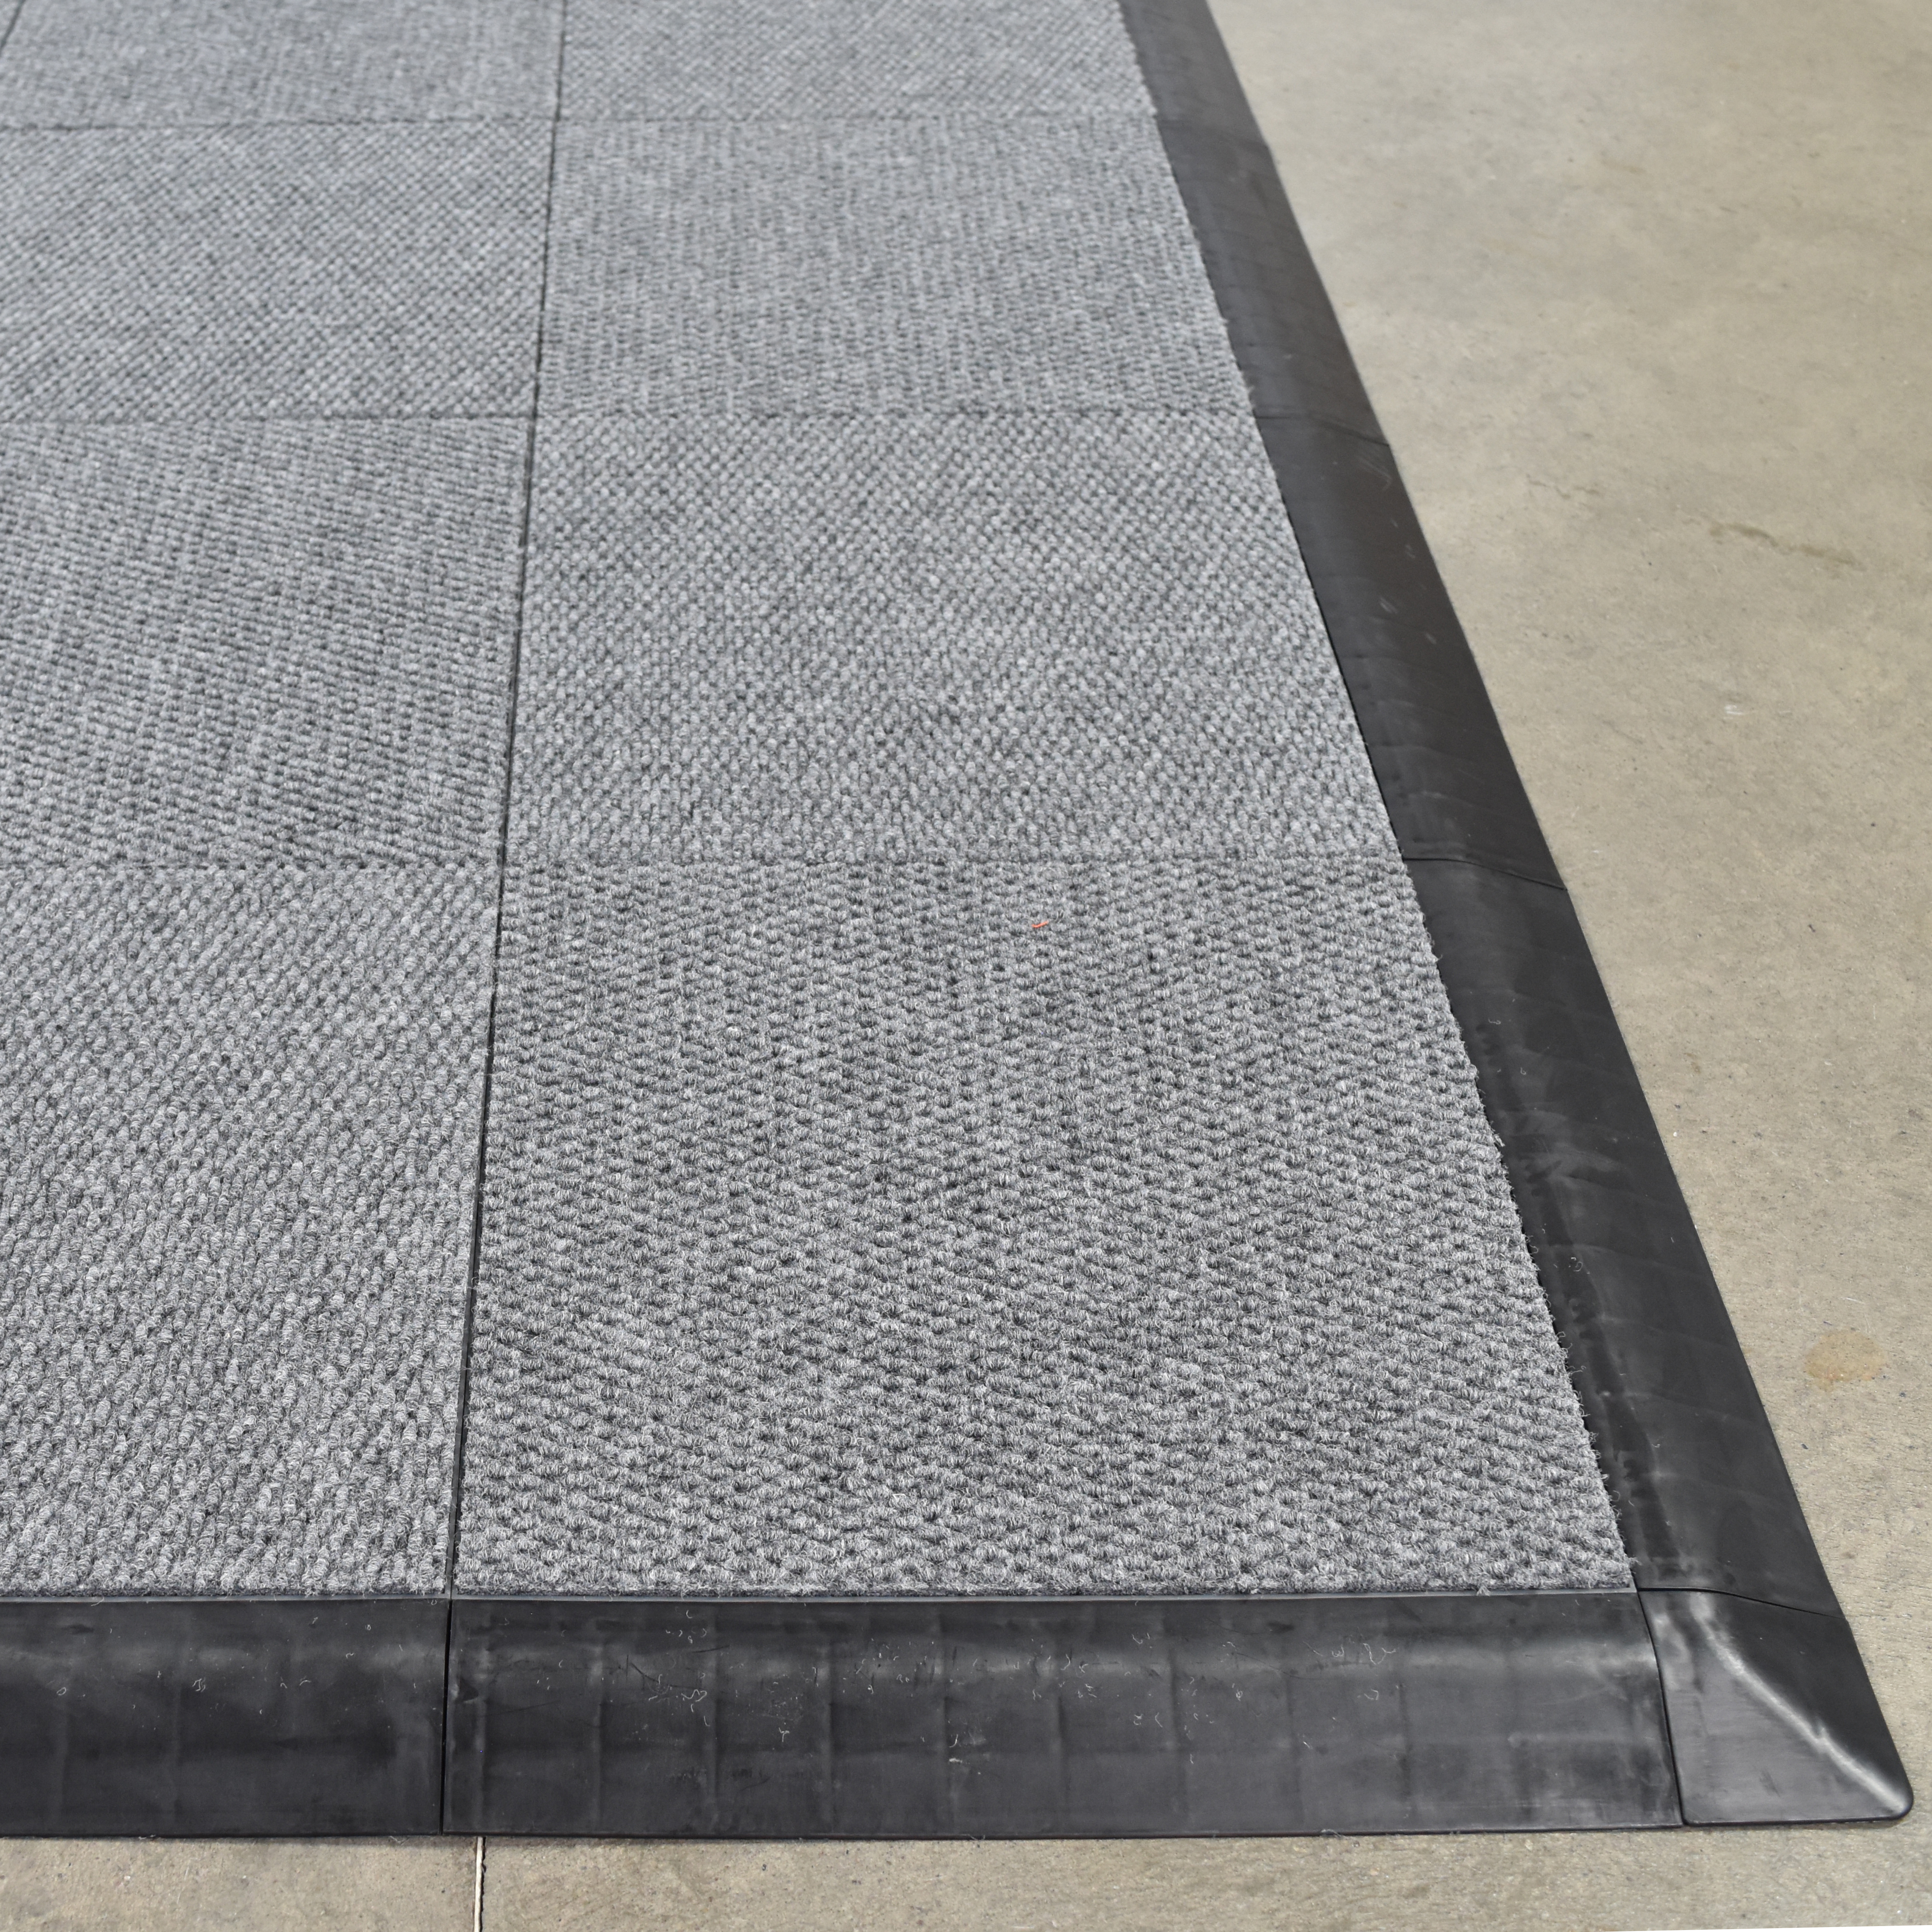 Carpet Square Modular Trade Show Tiles 10x20 Ft. Kit gray corner with borders